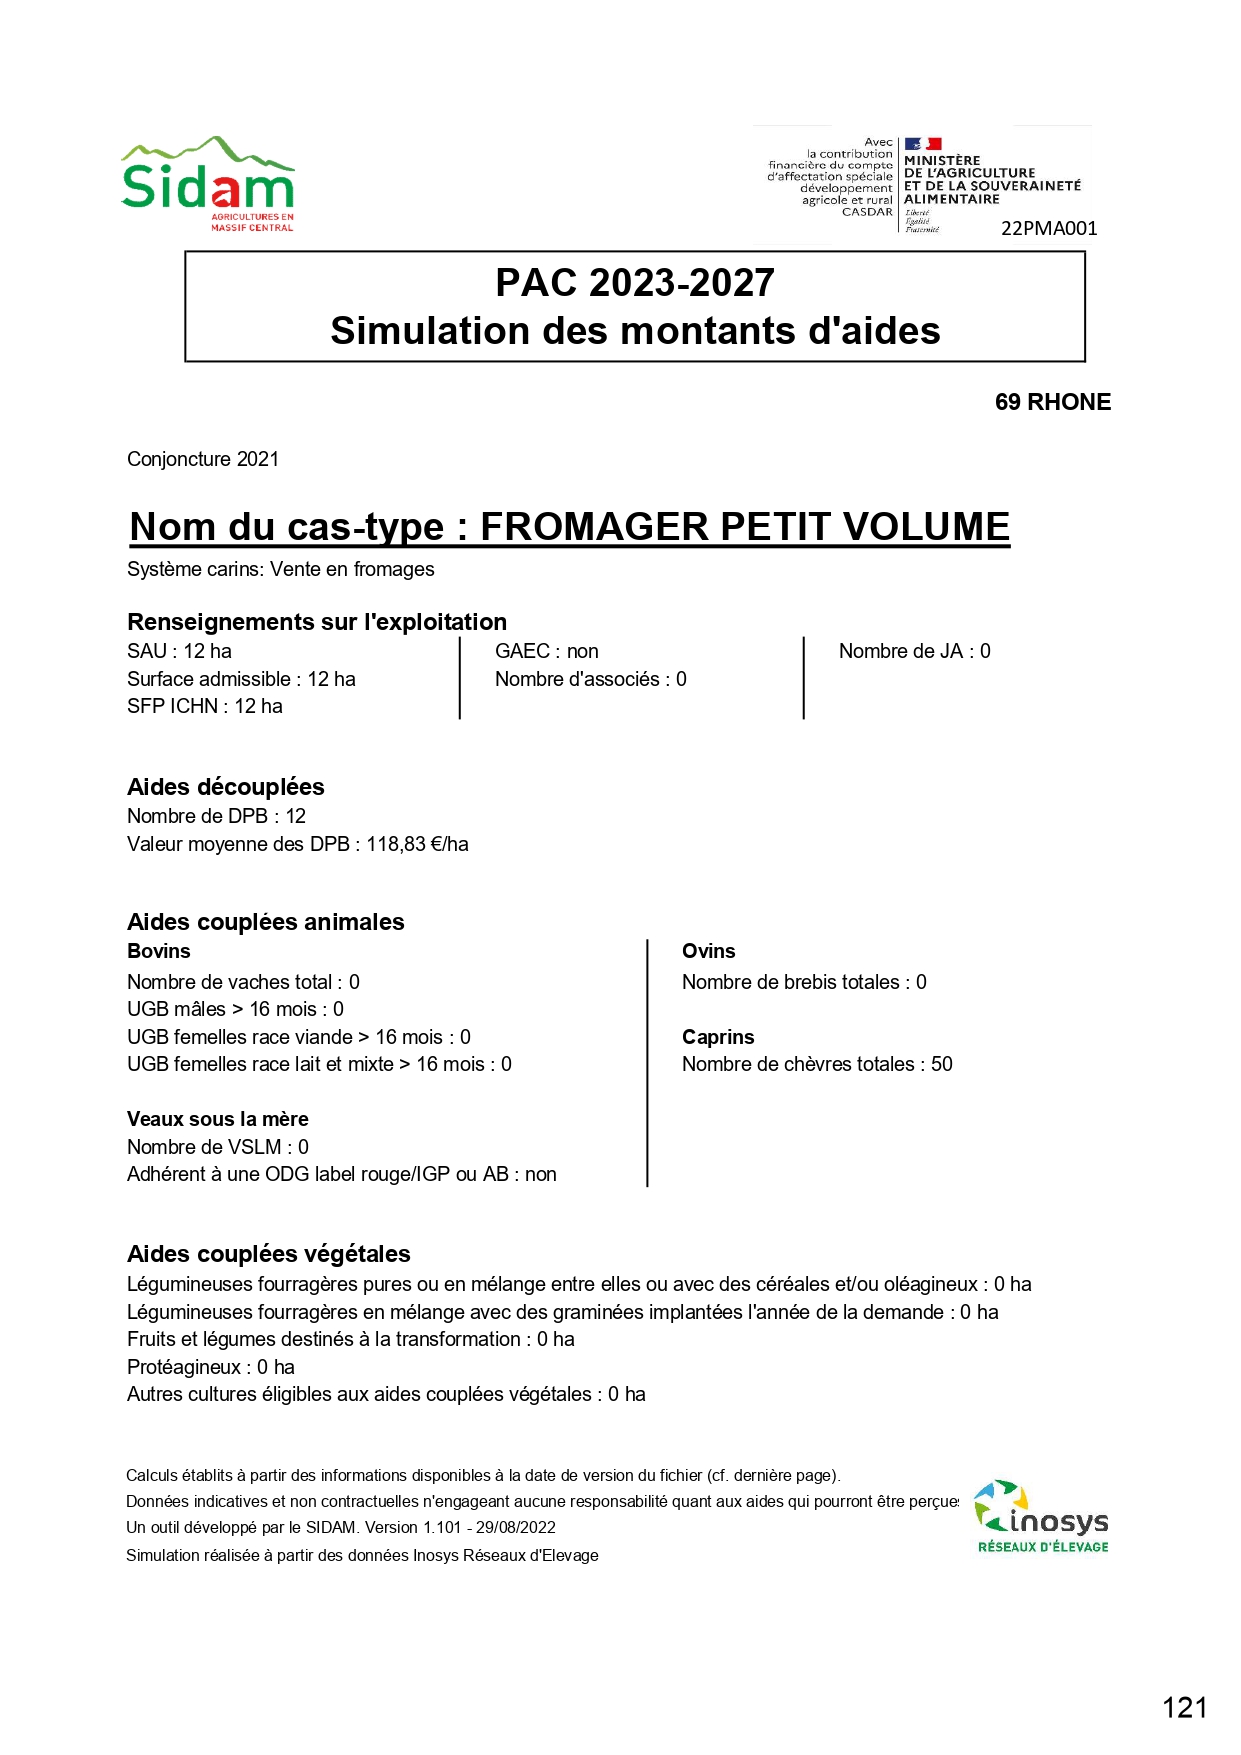 Etude impact PAC 23-27 sur castypes INOSYS-69-125_page-0053